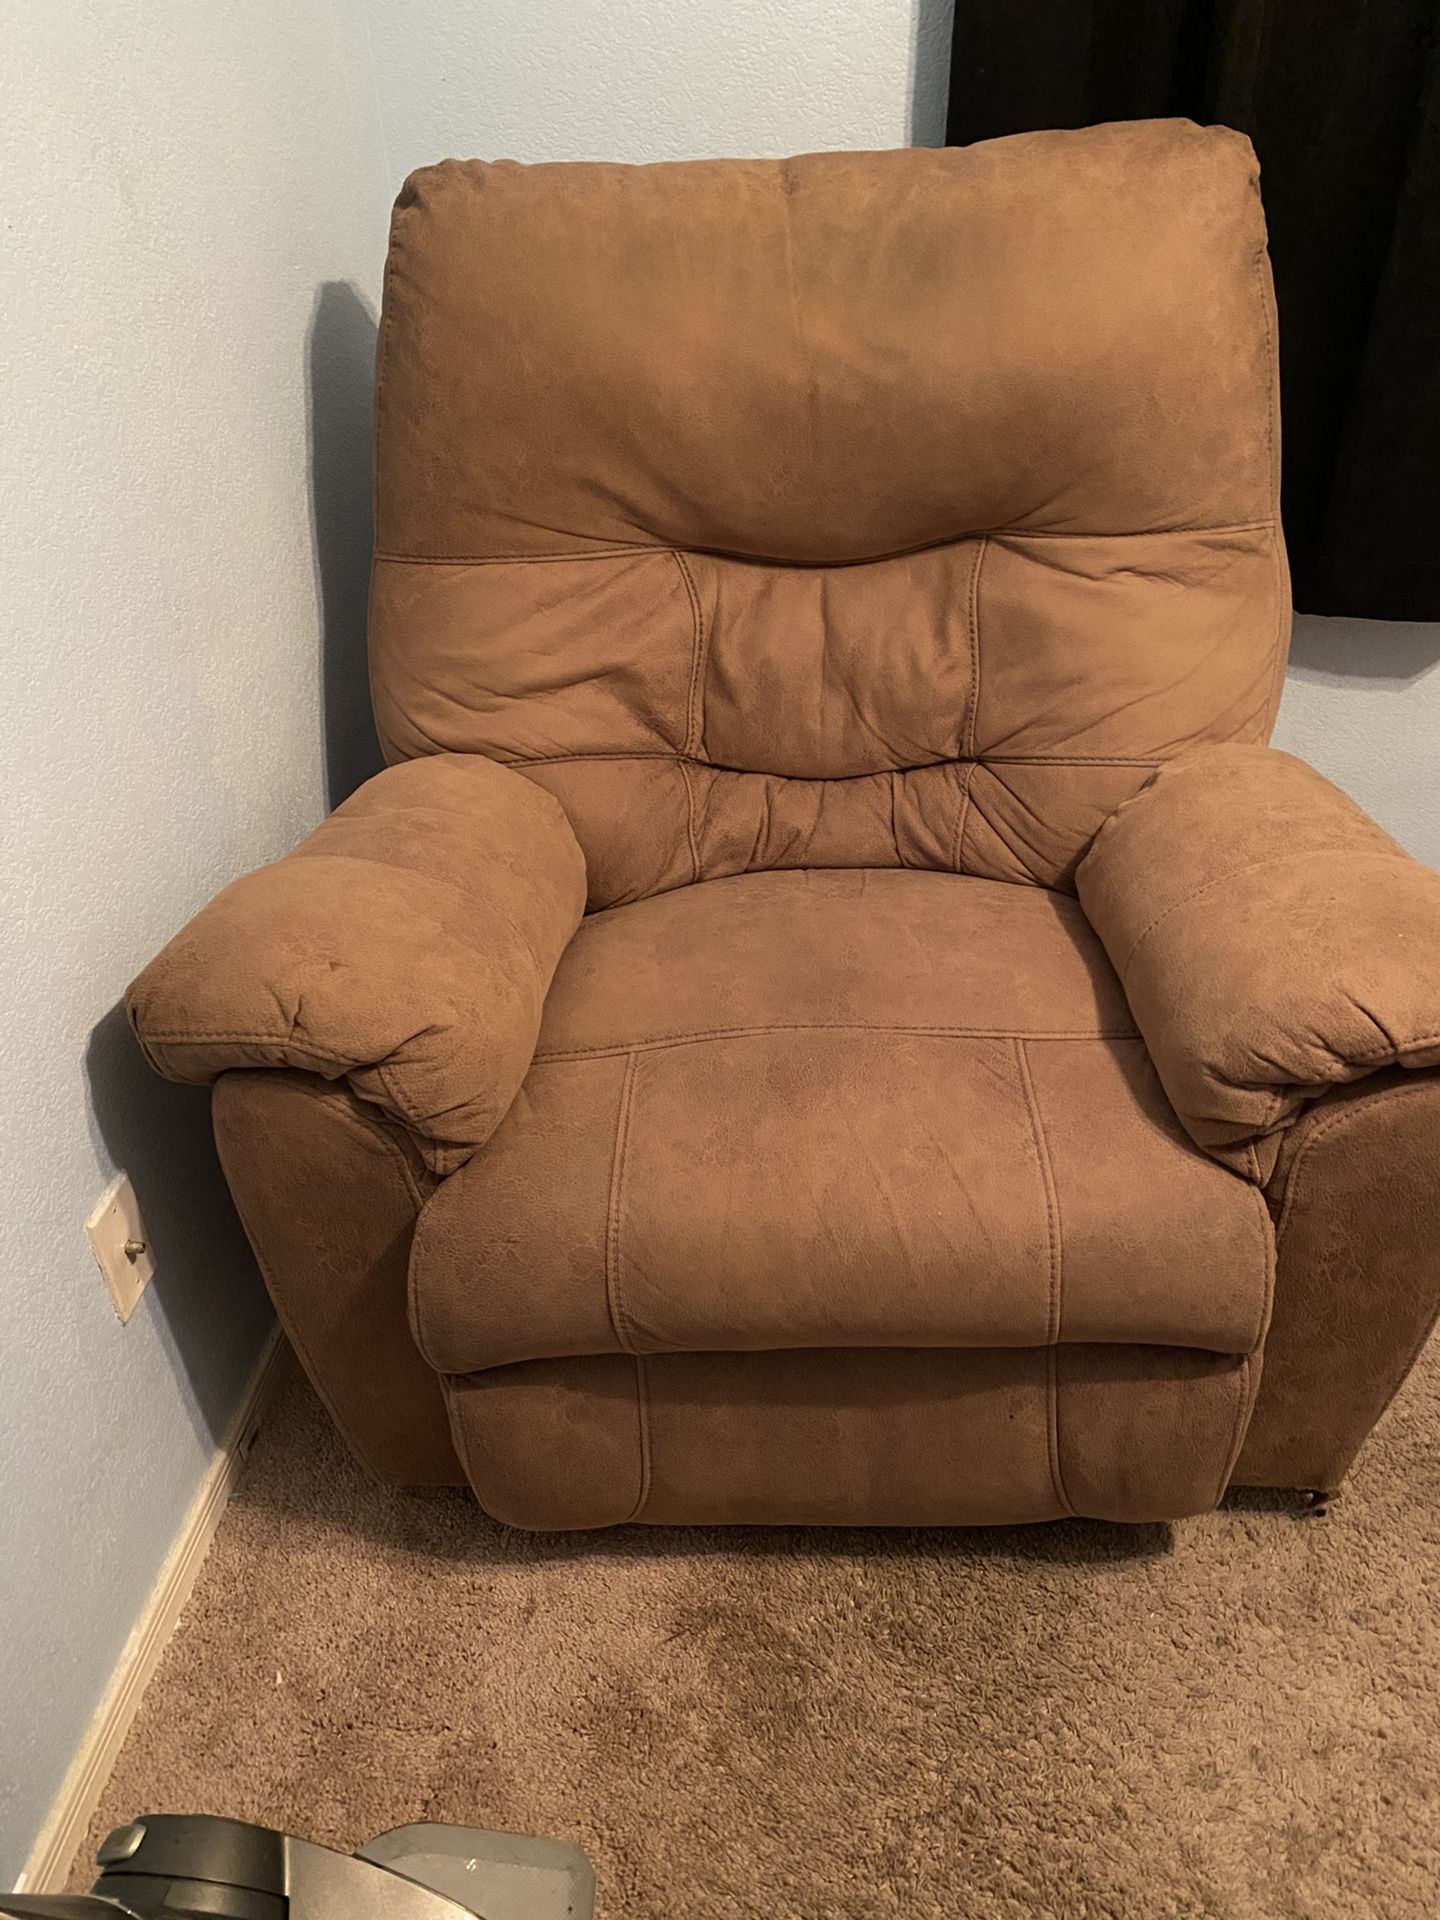 brown, recliner chair